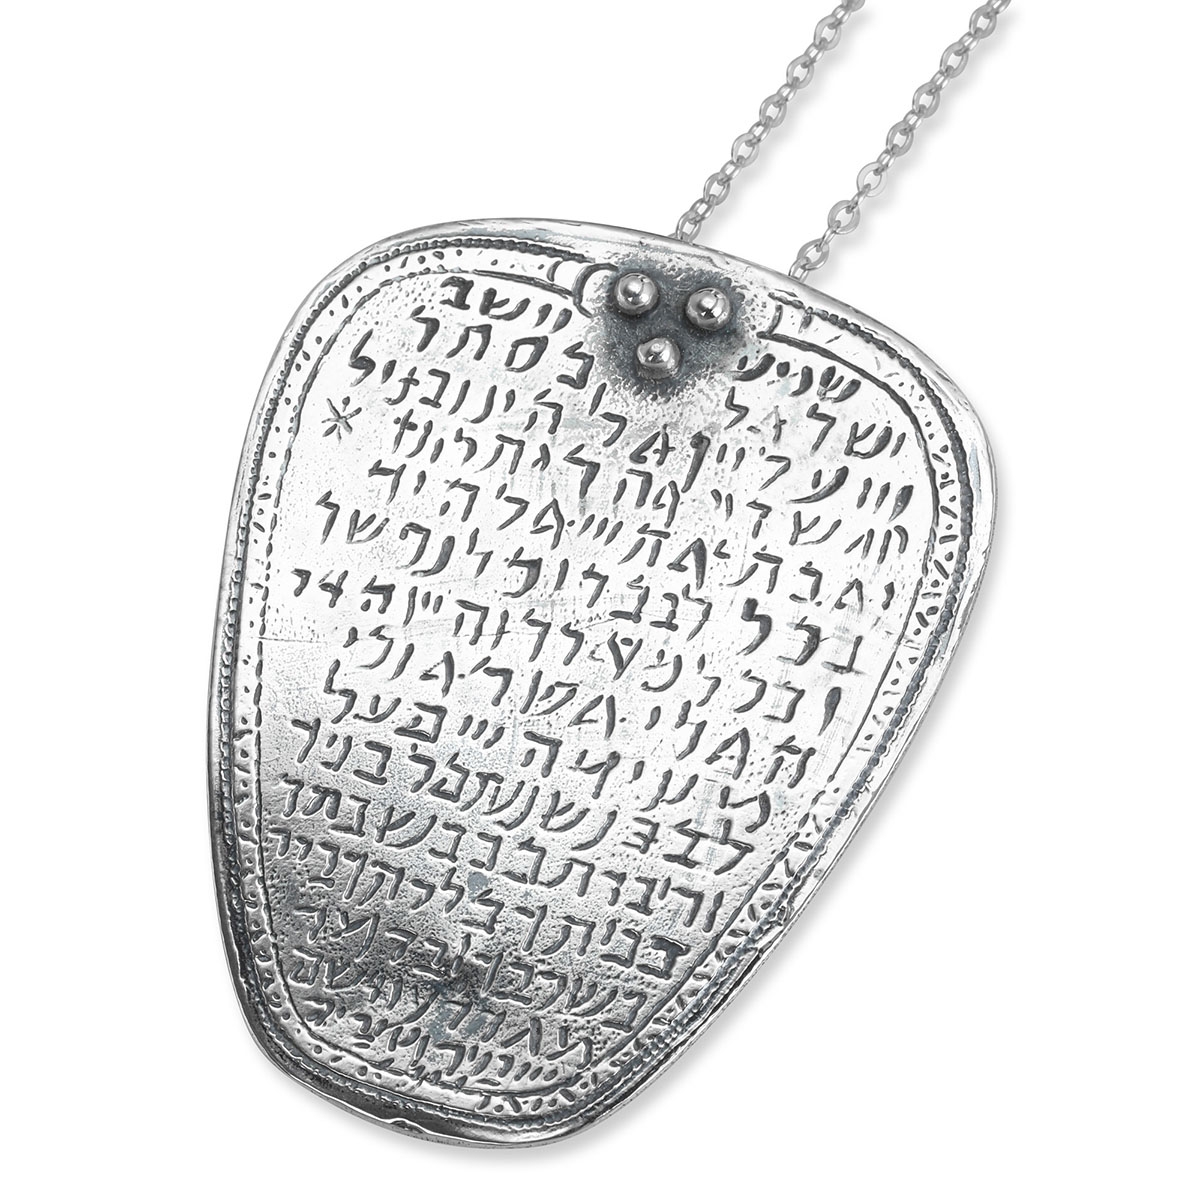  Shema Israel Silver Amulet. Adaptation. 5th-6th century CE - 1